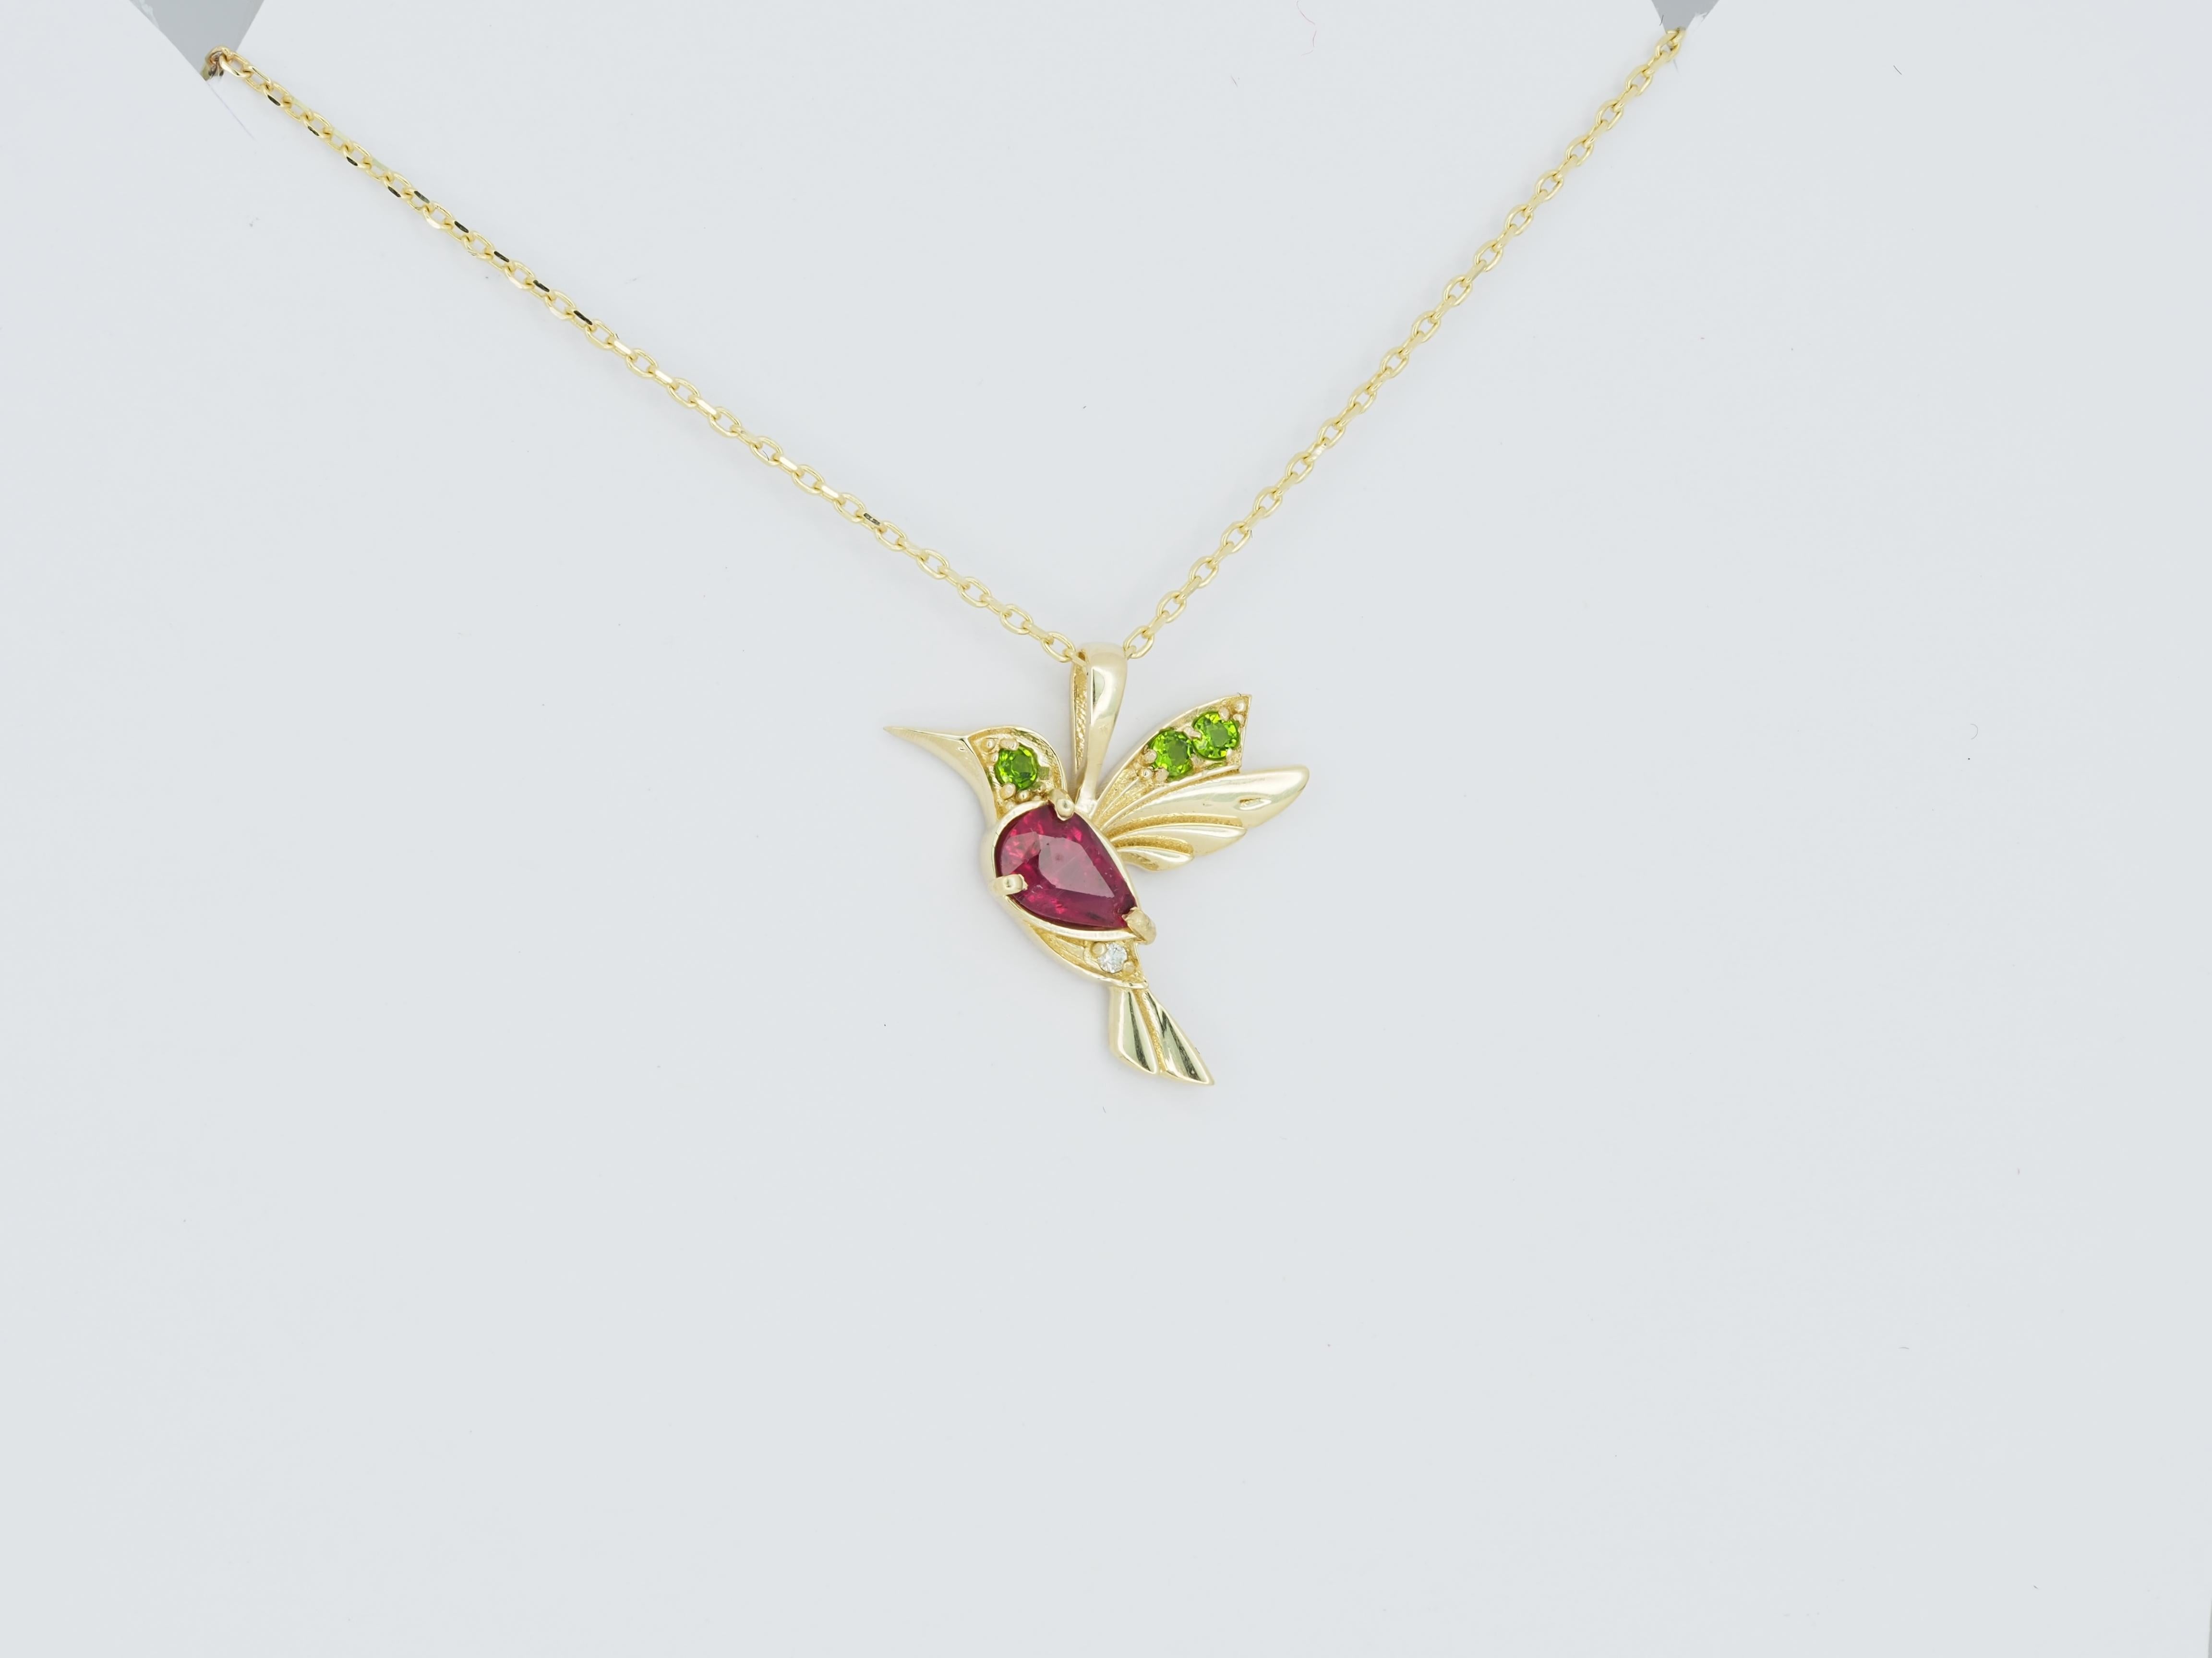 14k Gold Hummingbird Pendant with Rubies, Bird Pendant with Colored Gemstones 1